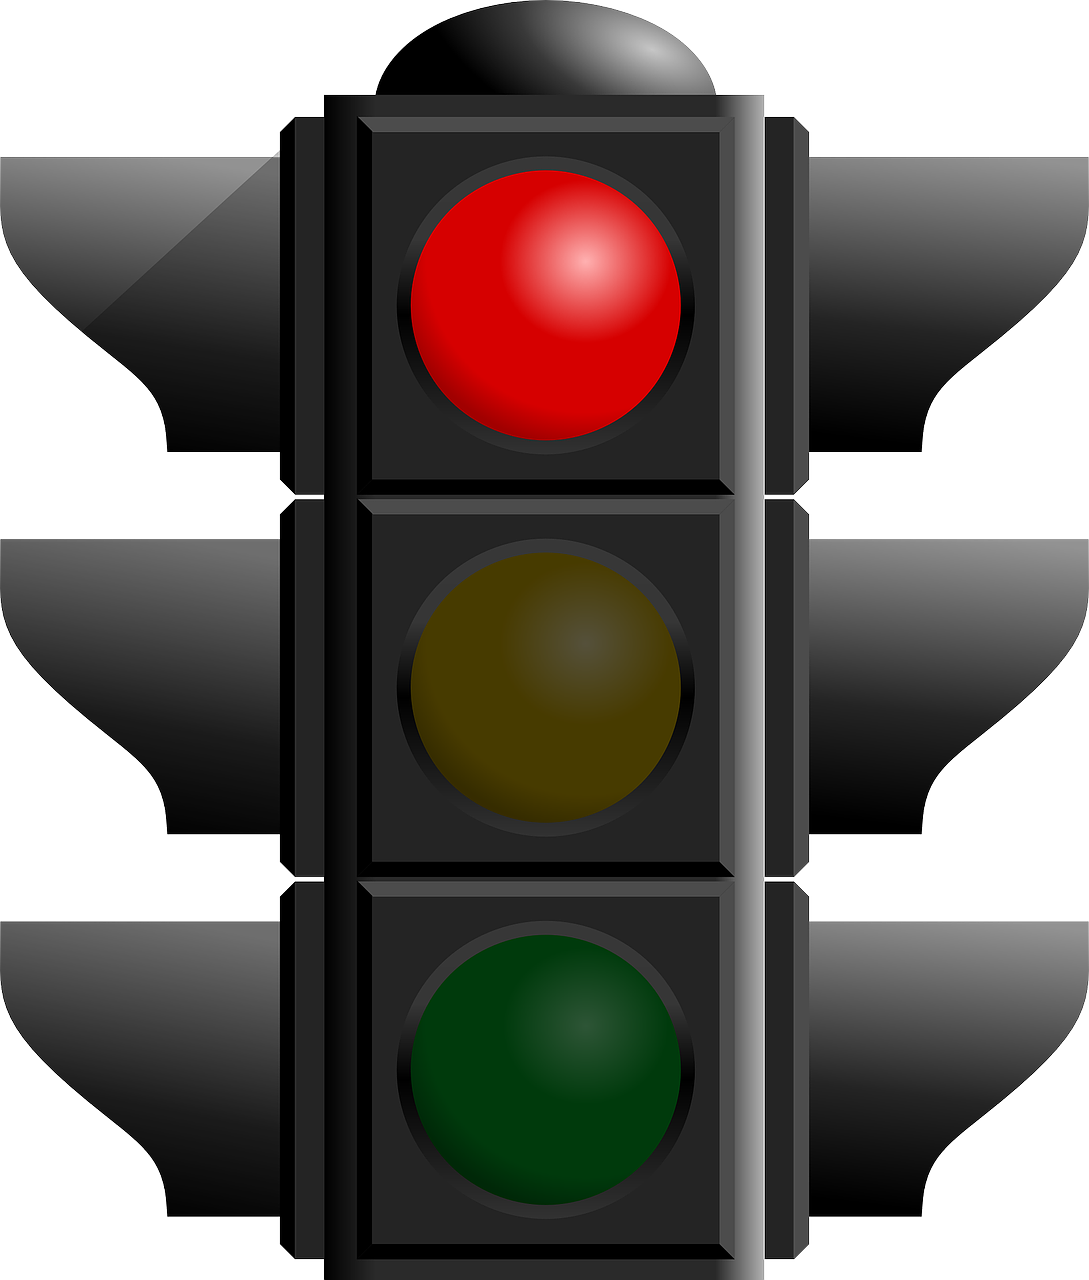 red light traffic light free photo